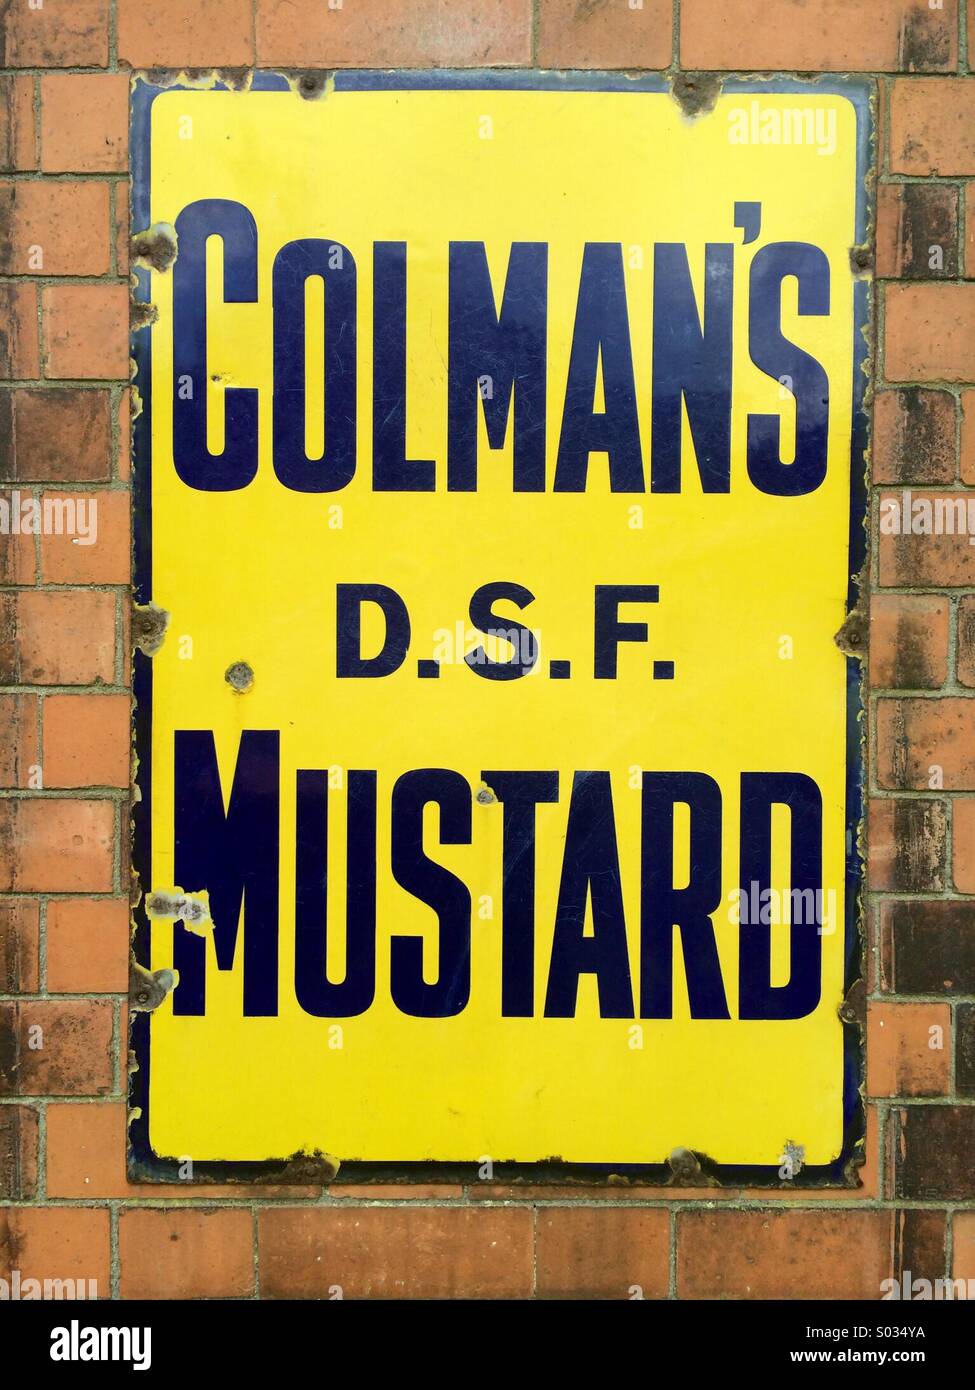 2 COLMANS ENGLISH MUSTARD 10x8" Retro Vintage Metal Advertising Sign Wall Art